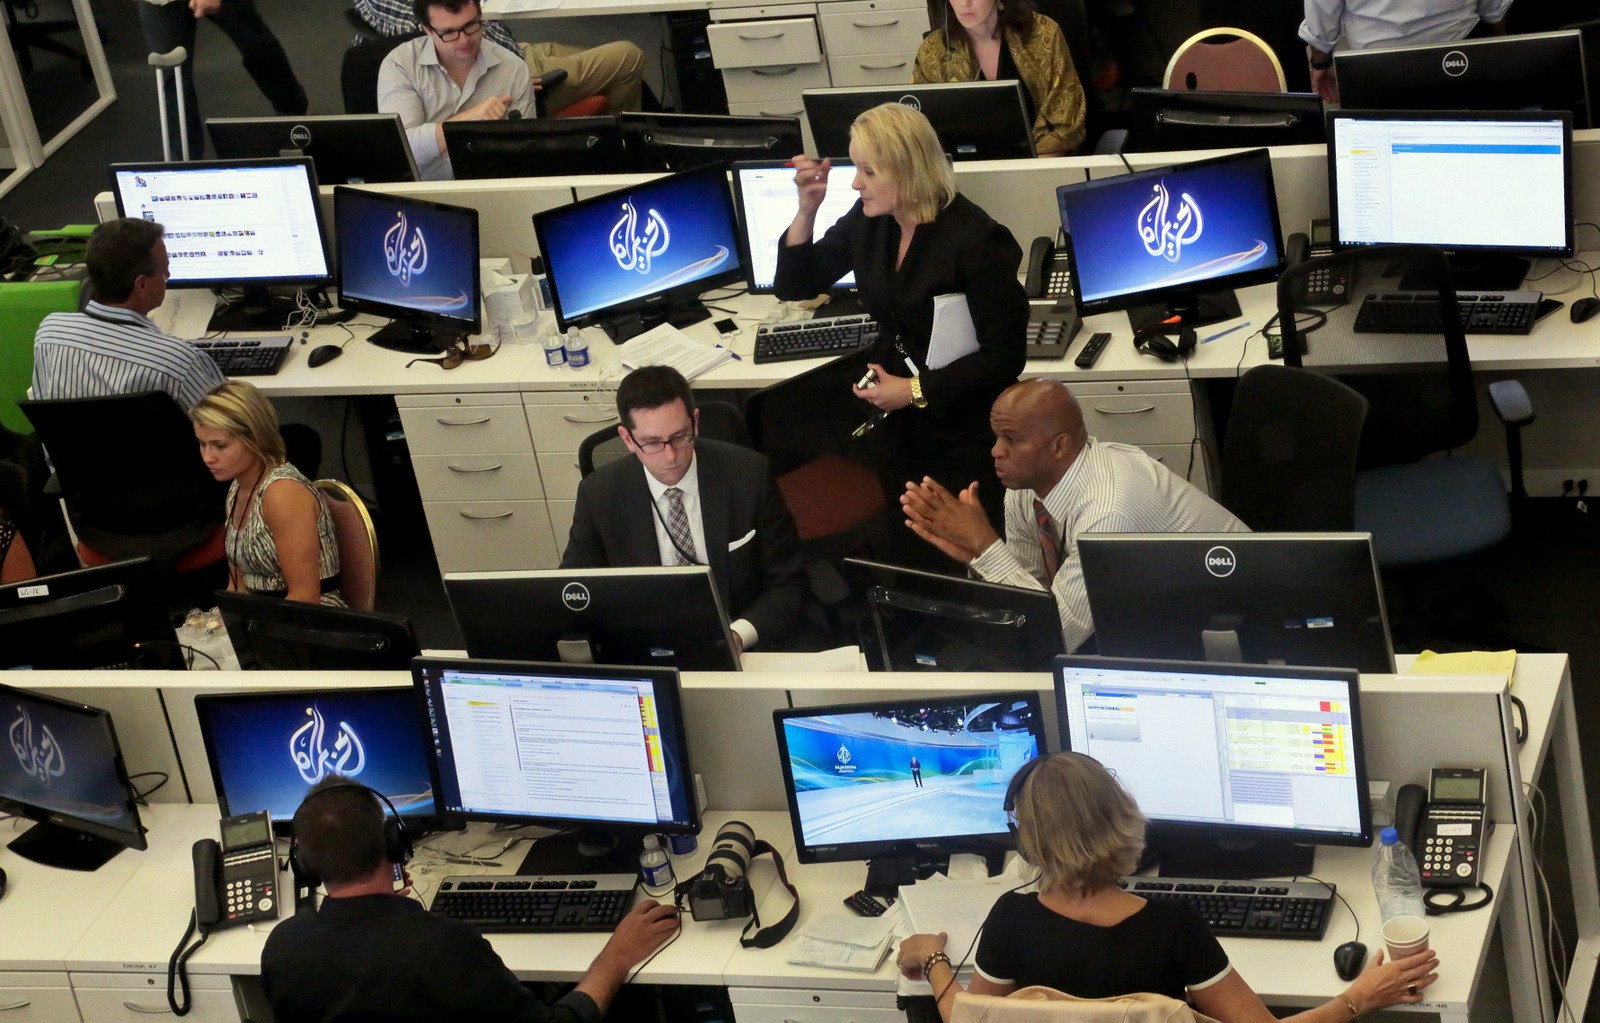 Al-Jazeera America editorial newsroom staff preparing for their first broadcast in New York. (AP/Bebeto Matthews)